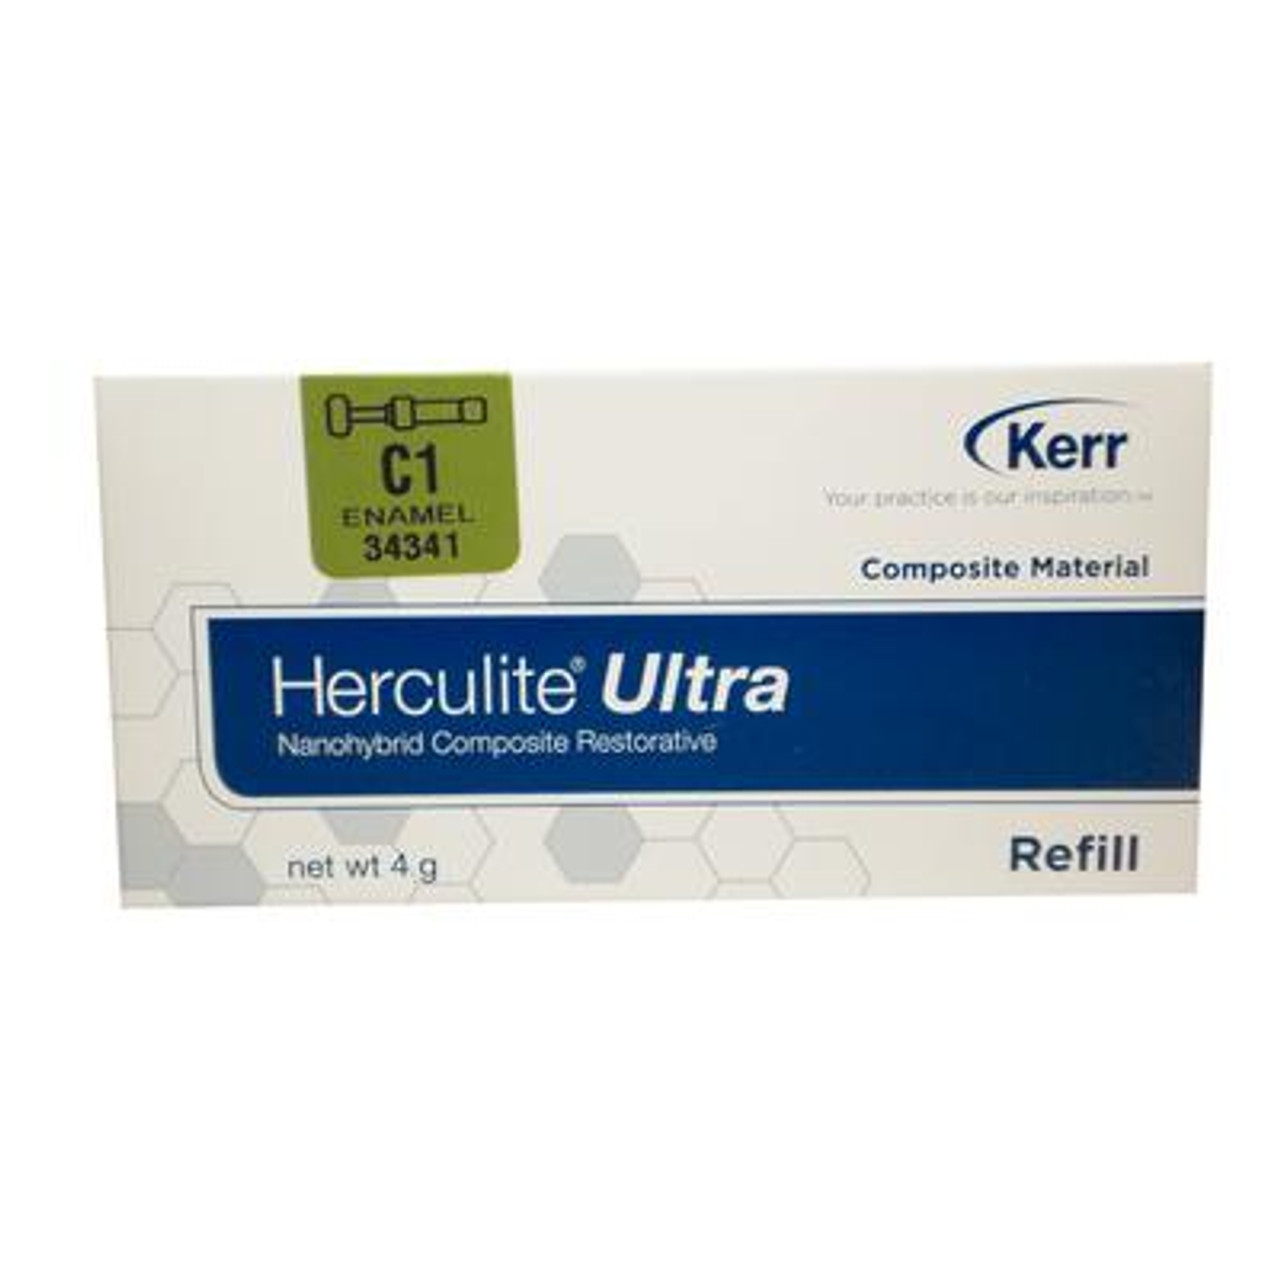 Kerr Herculite Ultra Refill C1 Enamel Syringe ea